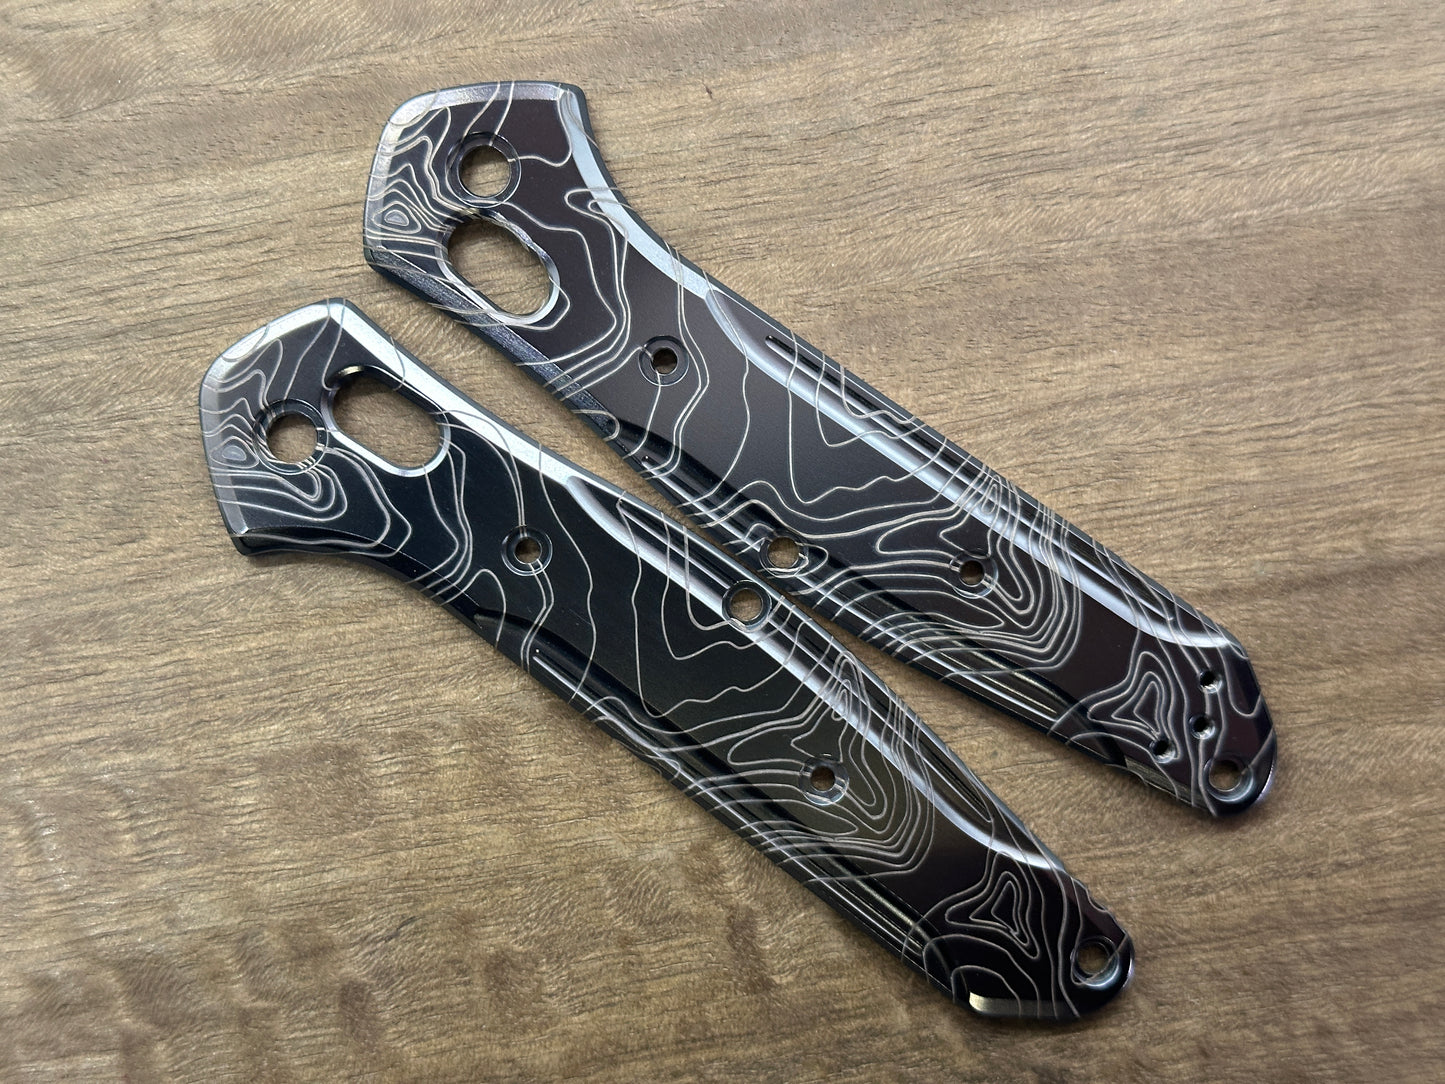 Black TOPO engraved Titanium Scales for Benchmade 940 Osborne